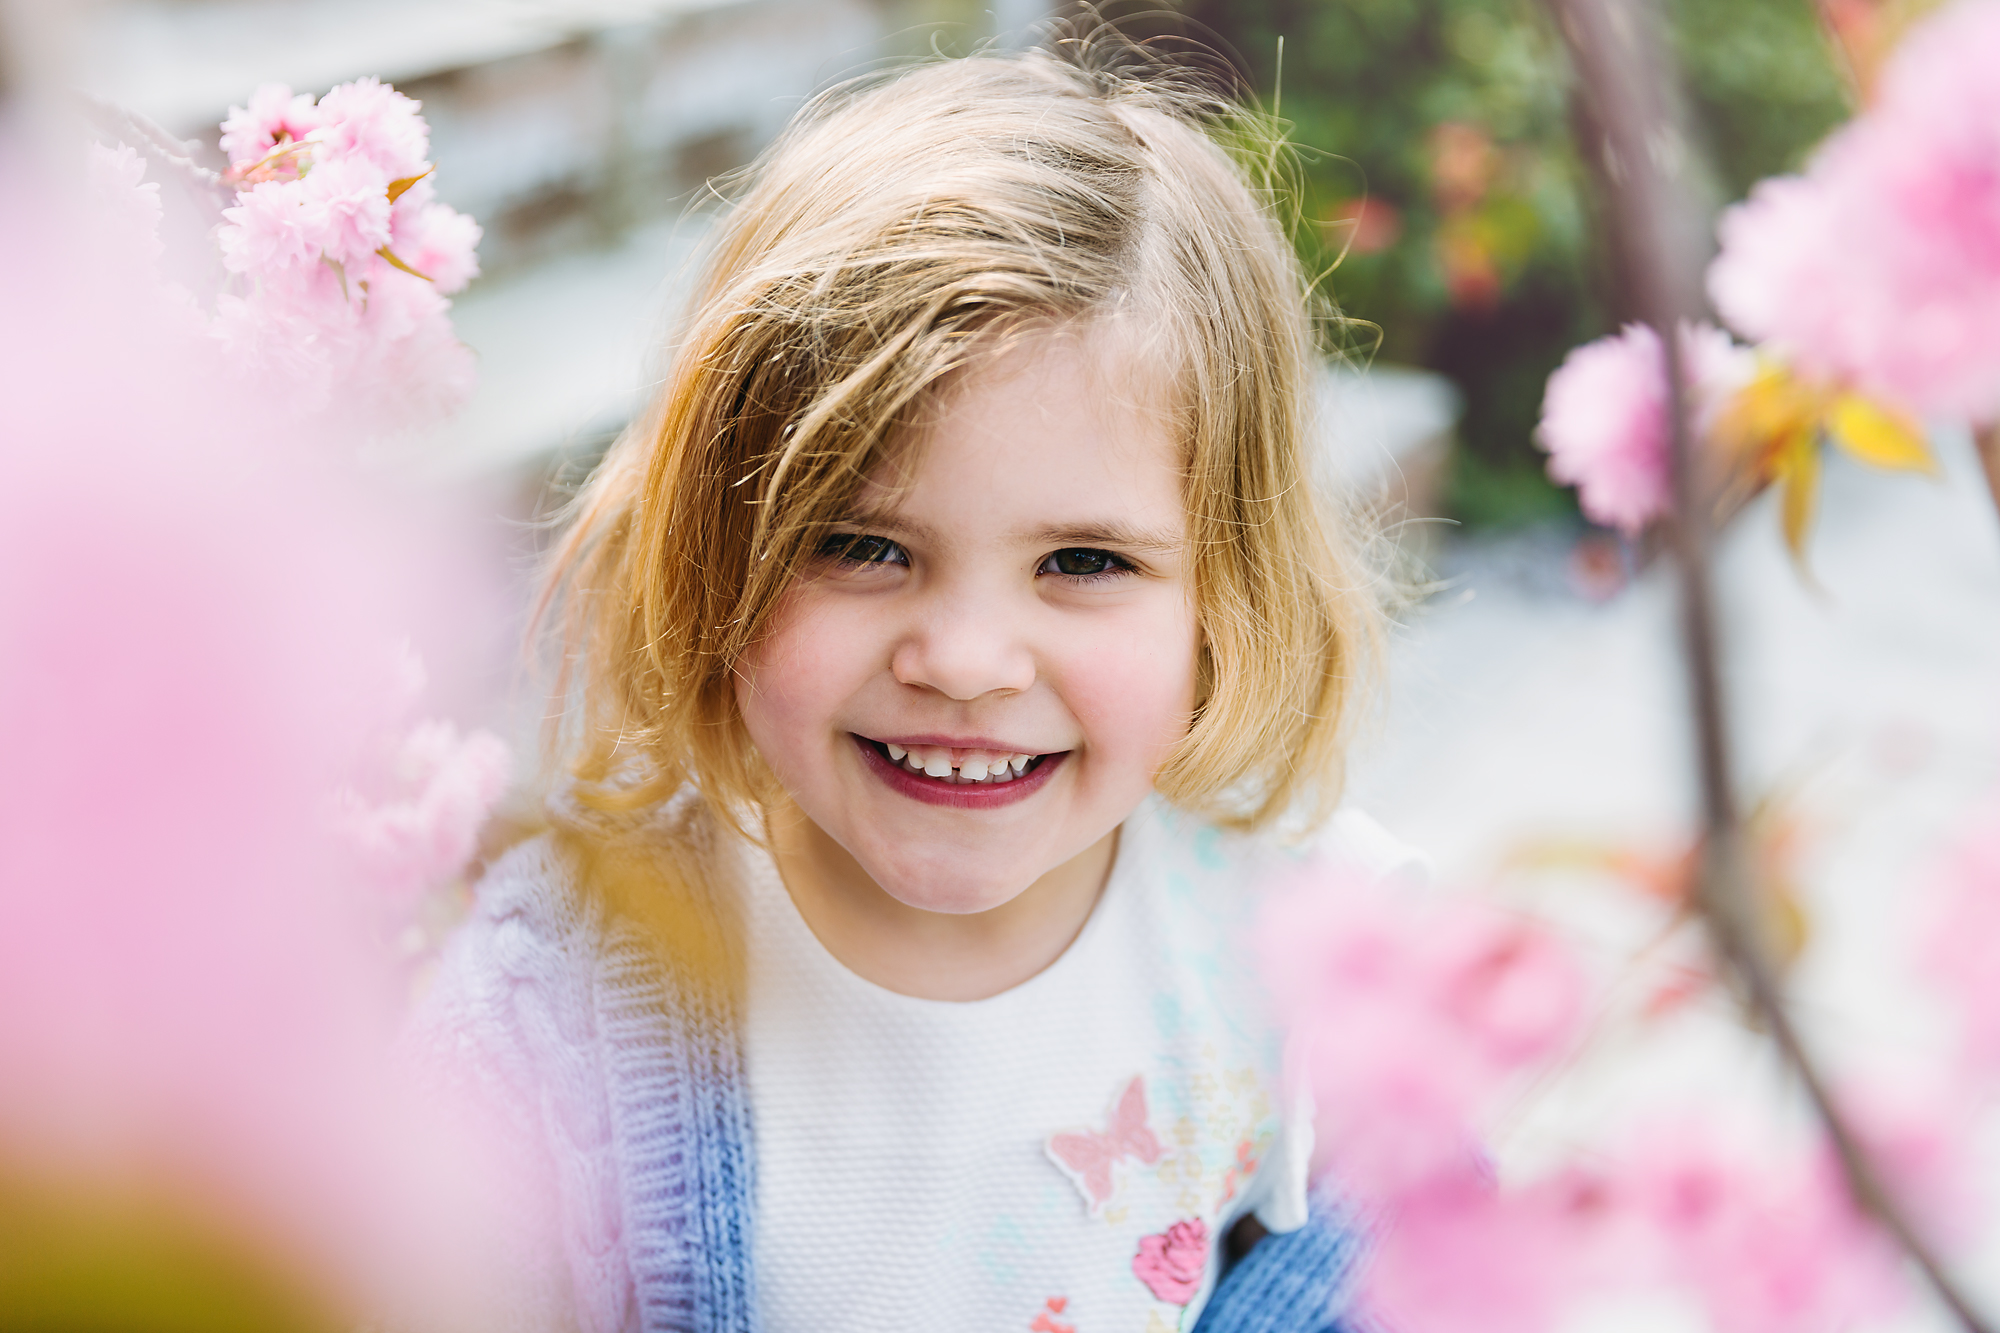 Children's portraits in spring cherry blossom